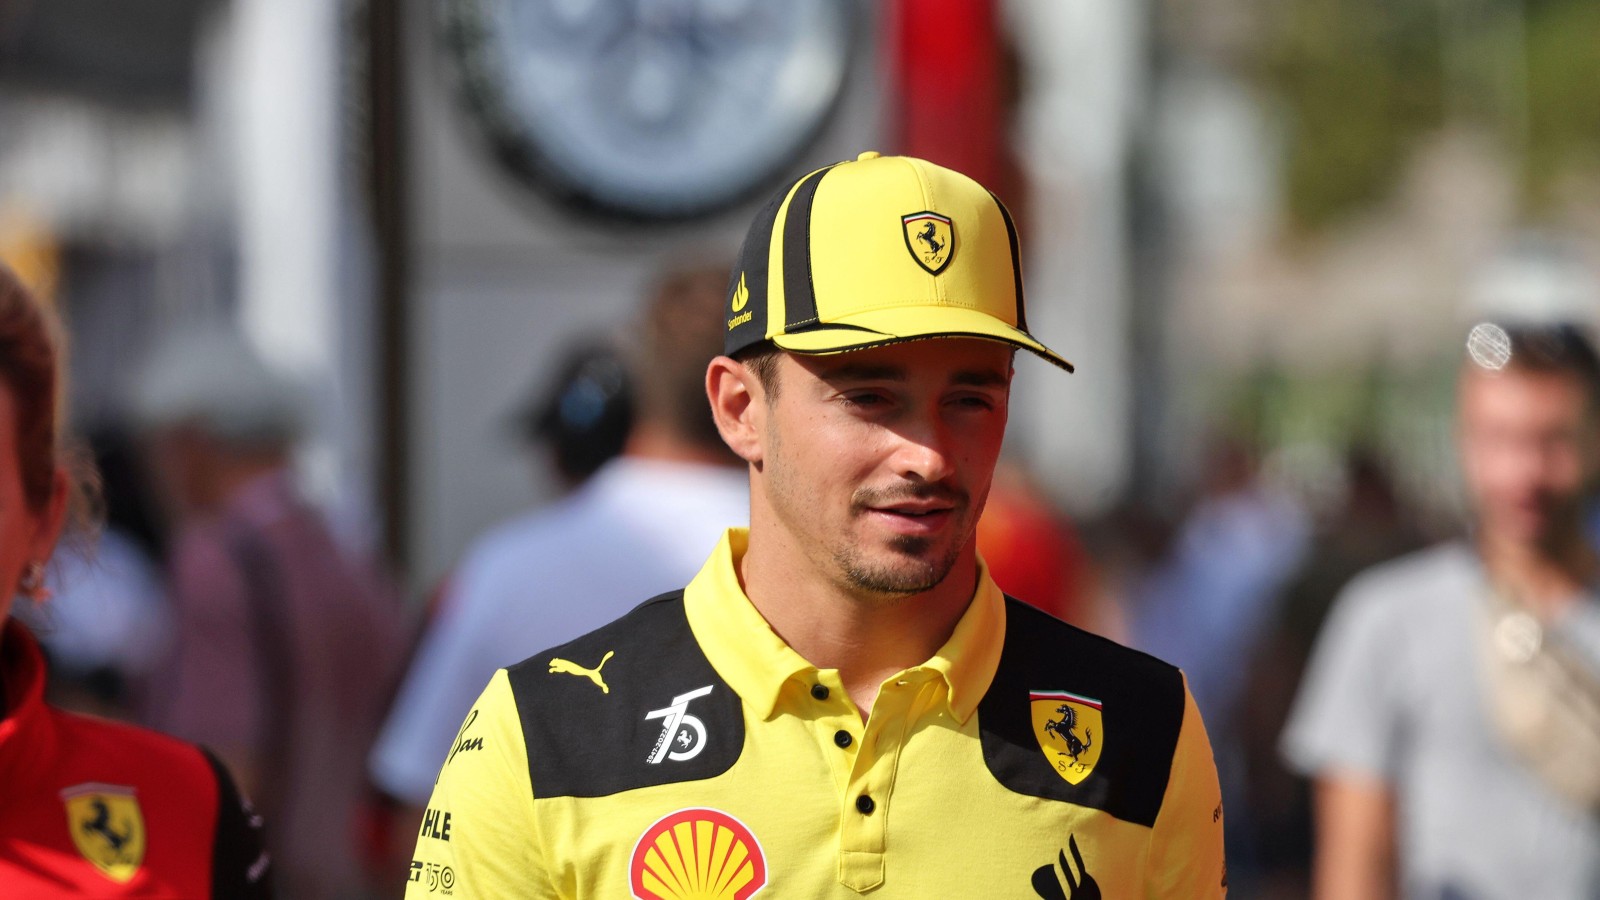 Charles Leclerc, Ferrari, wearing the celebratory yellow Ferrari clothing. Italy, September 2022.